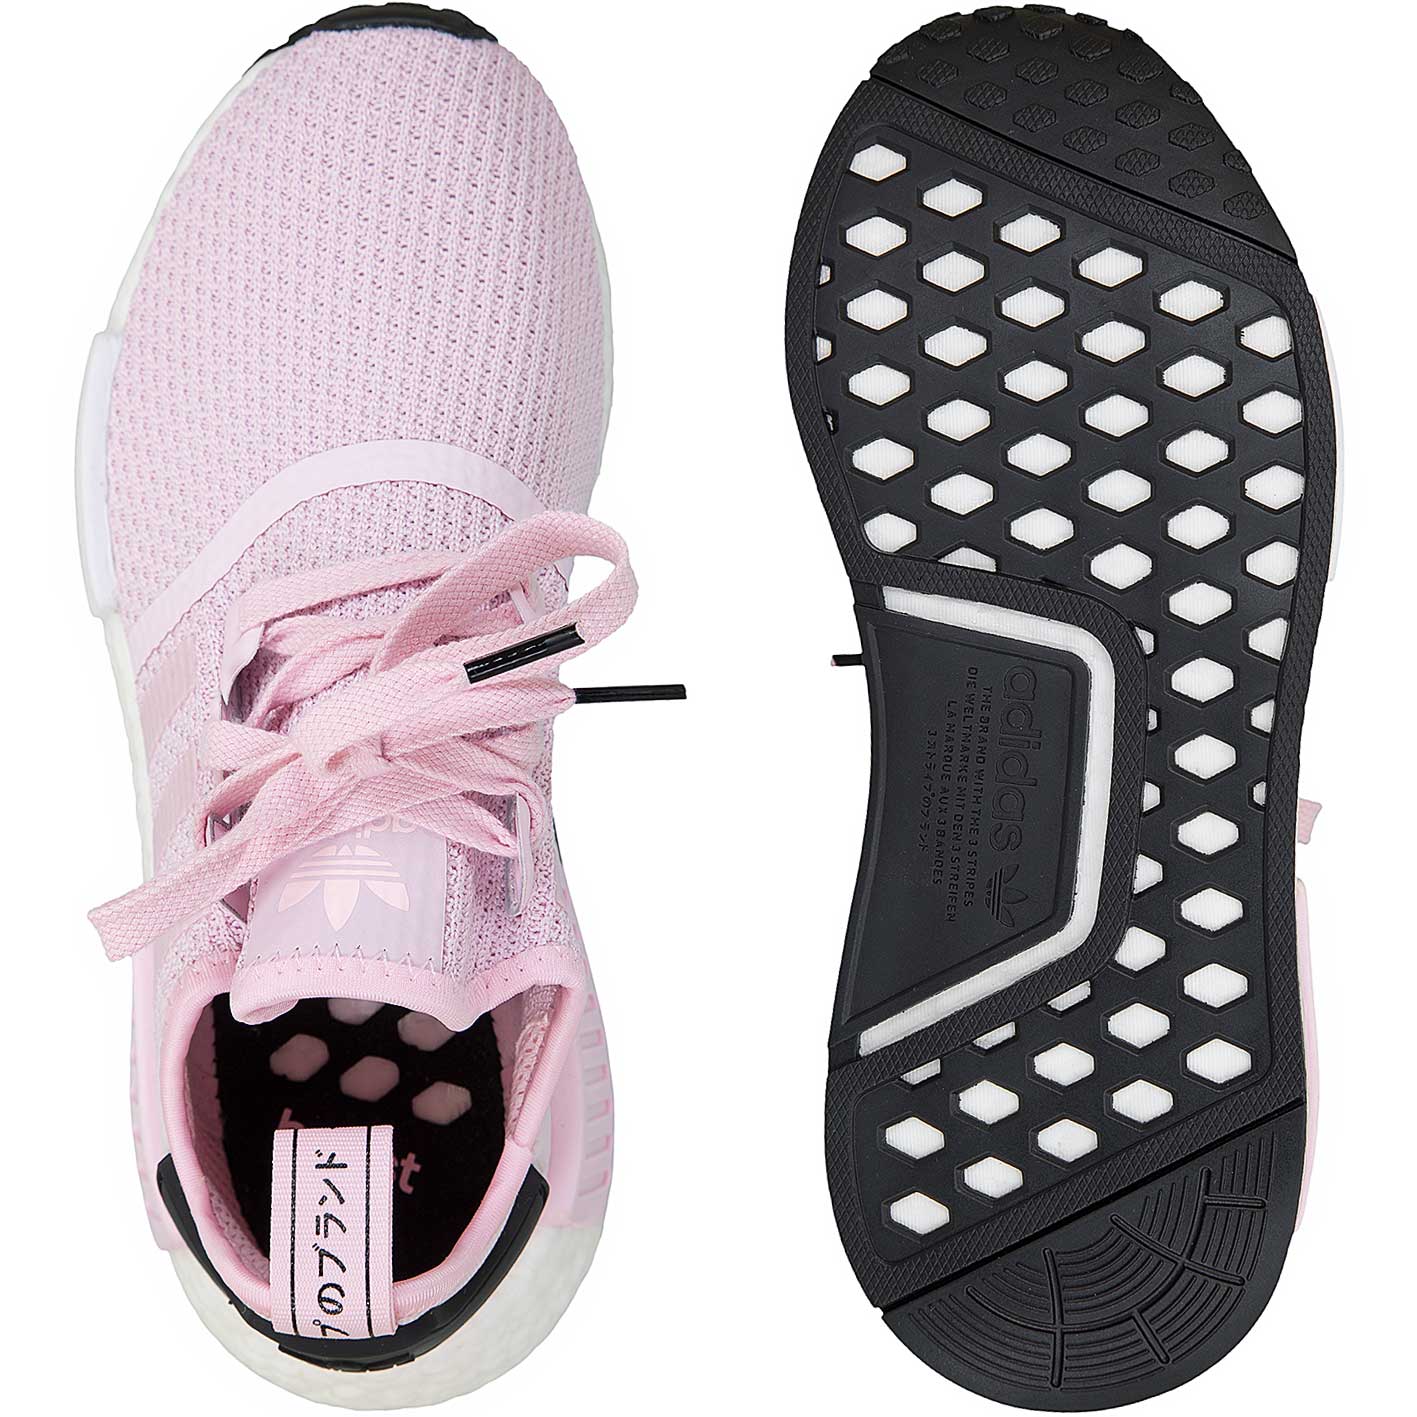 ☆ Adidas Originals Damen Sneaker NMD R1 pink - hier bestellen!